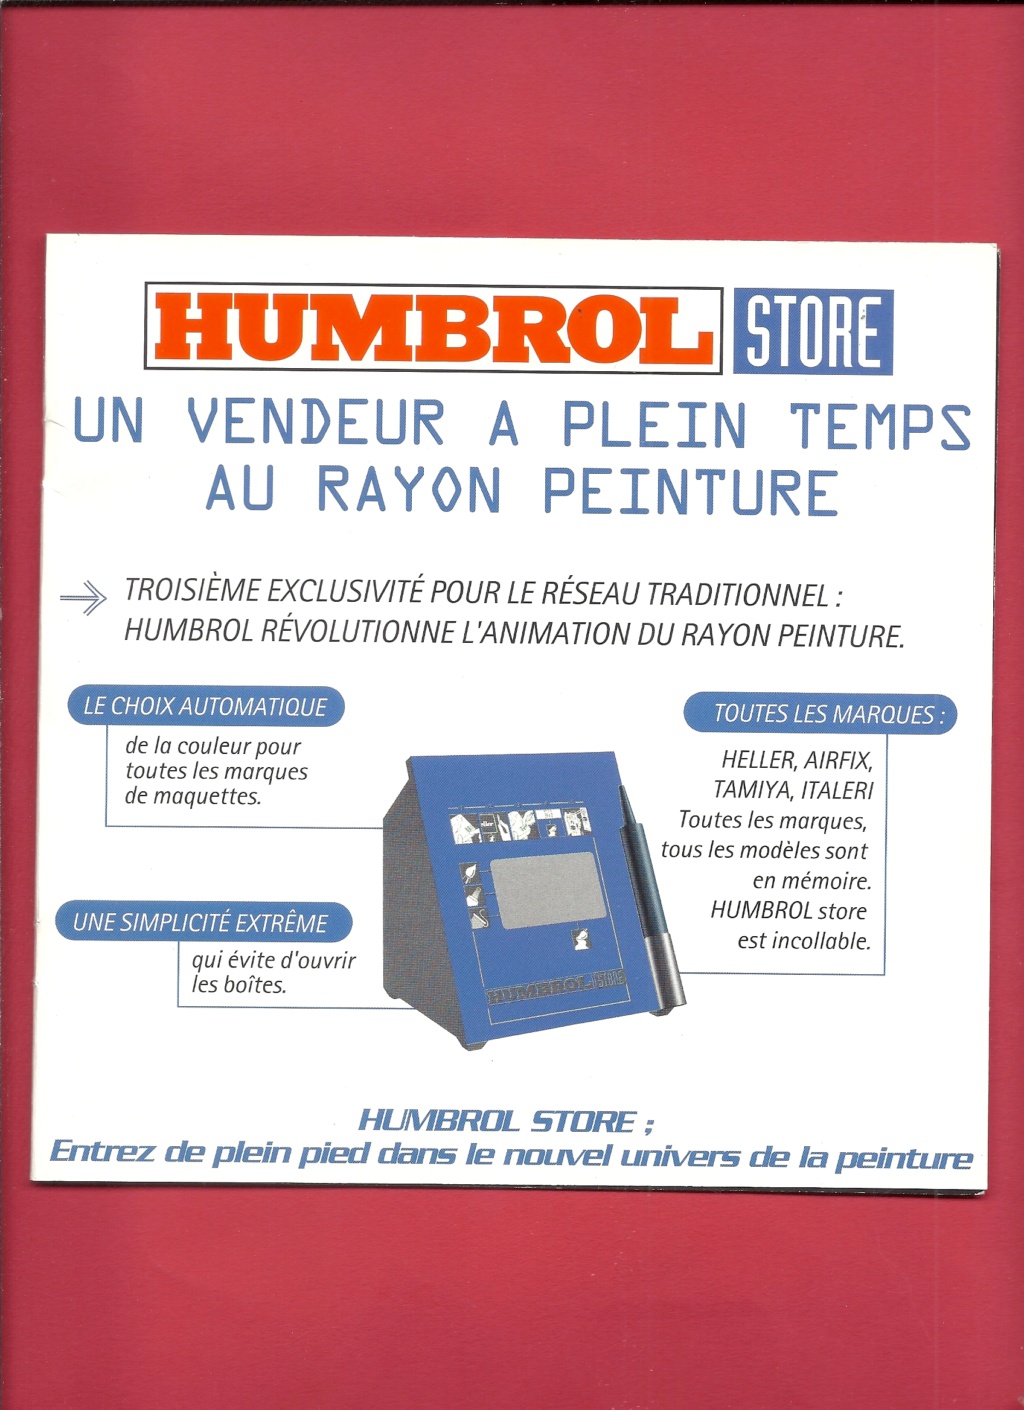 [HUMBROL 1997] Plaquette de présentation système HUMBROL STORE 1997 Humbr101